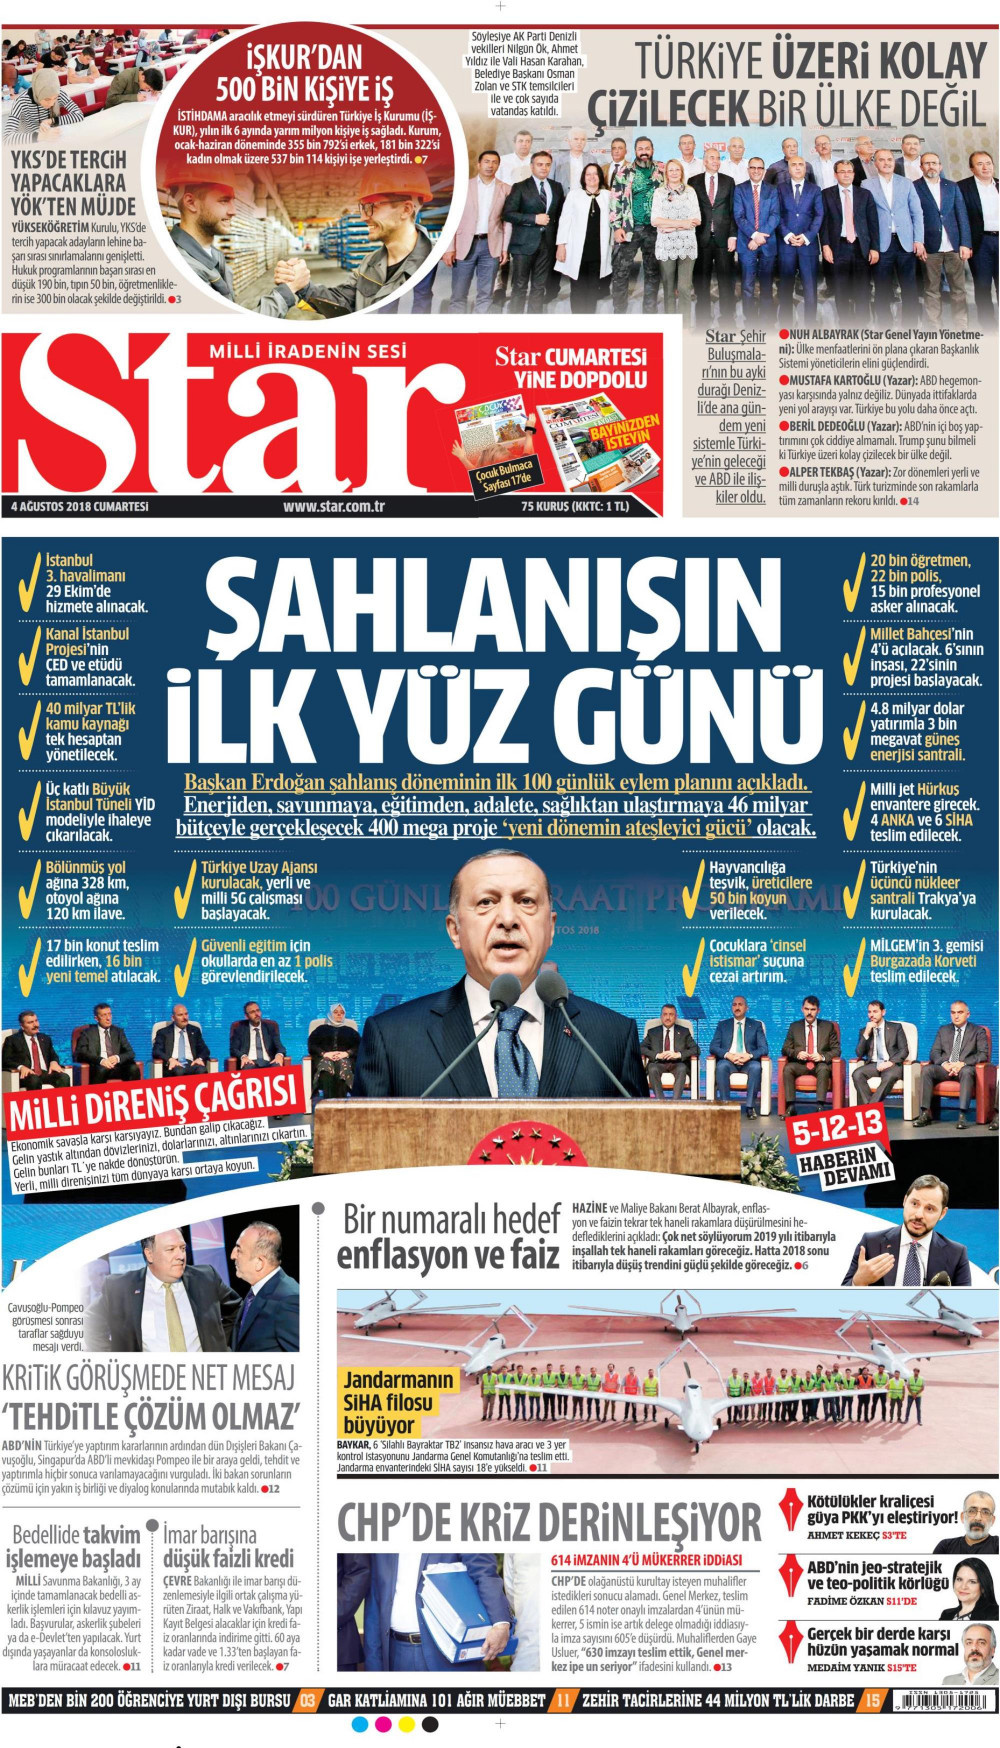 Gazete manşetleri 4 Ağustos 2018 Sabah - Posta - Hürriyet - Milliyet